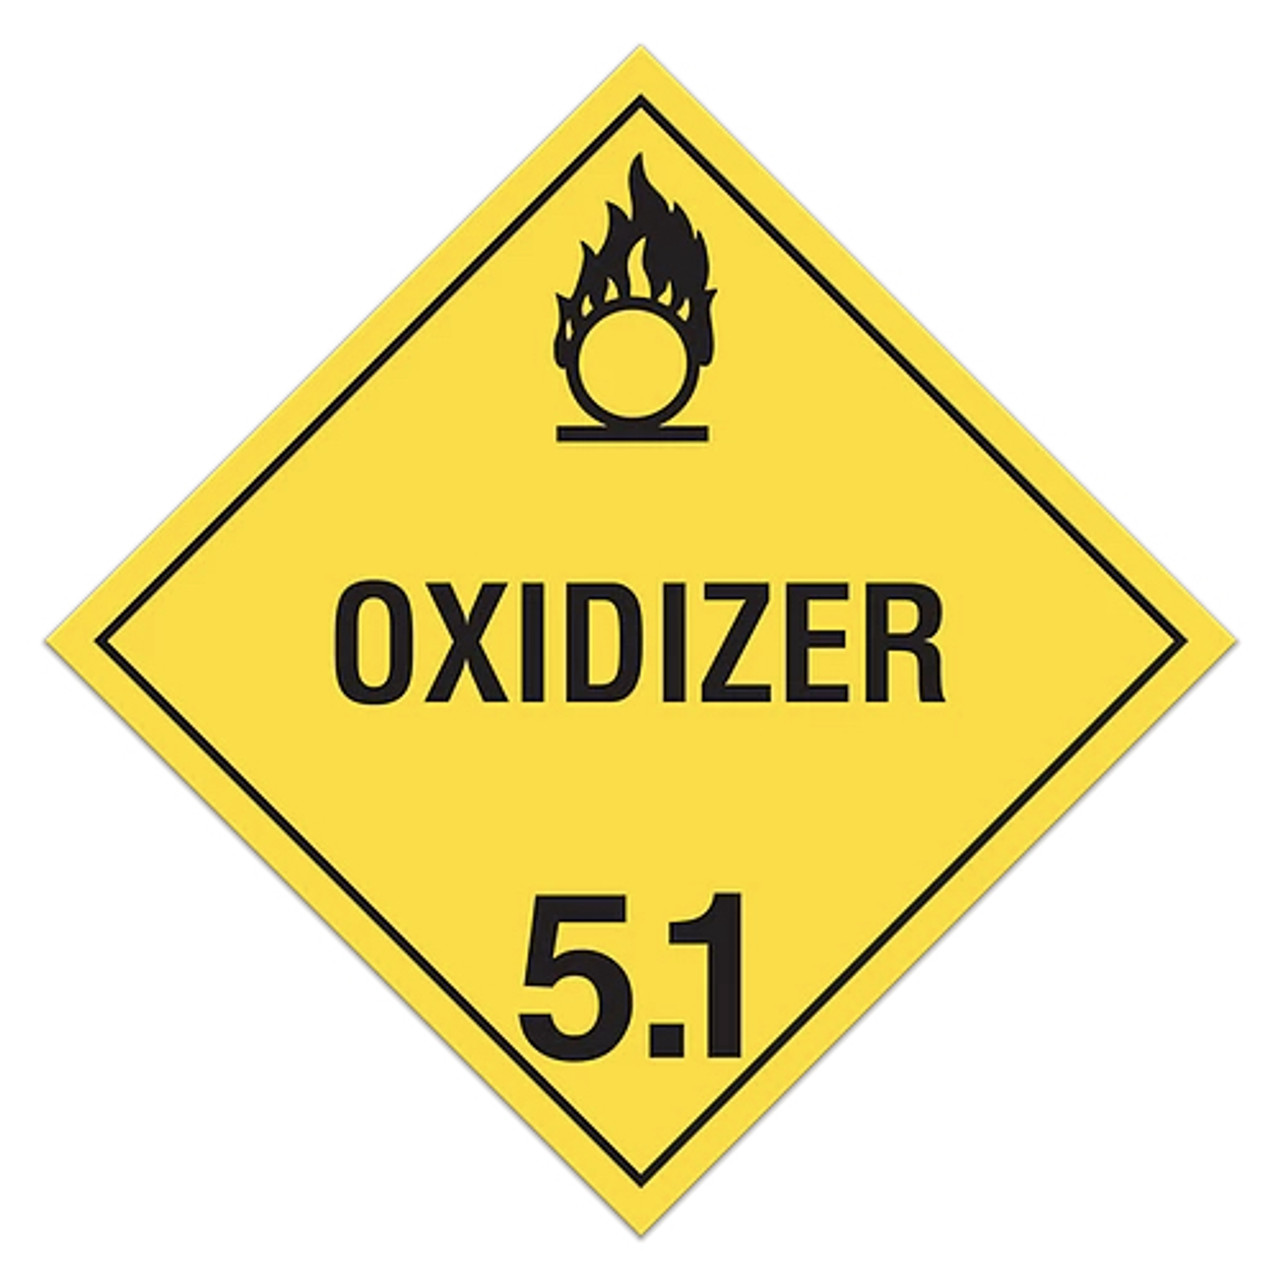 5.1 Oxidizing Substances TB 10.5" x 10.5"